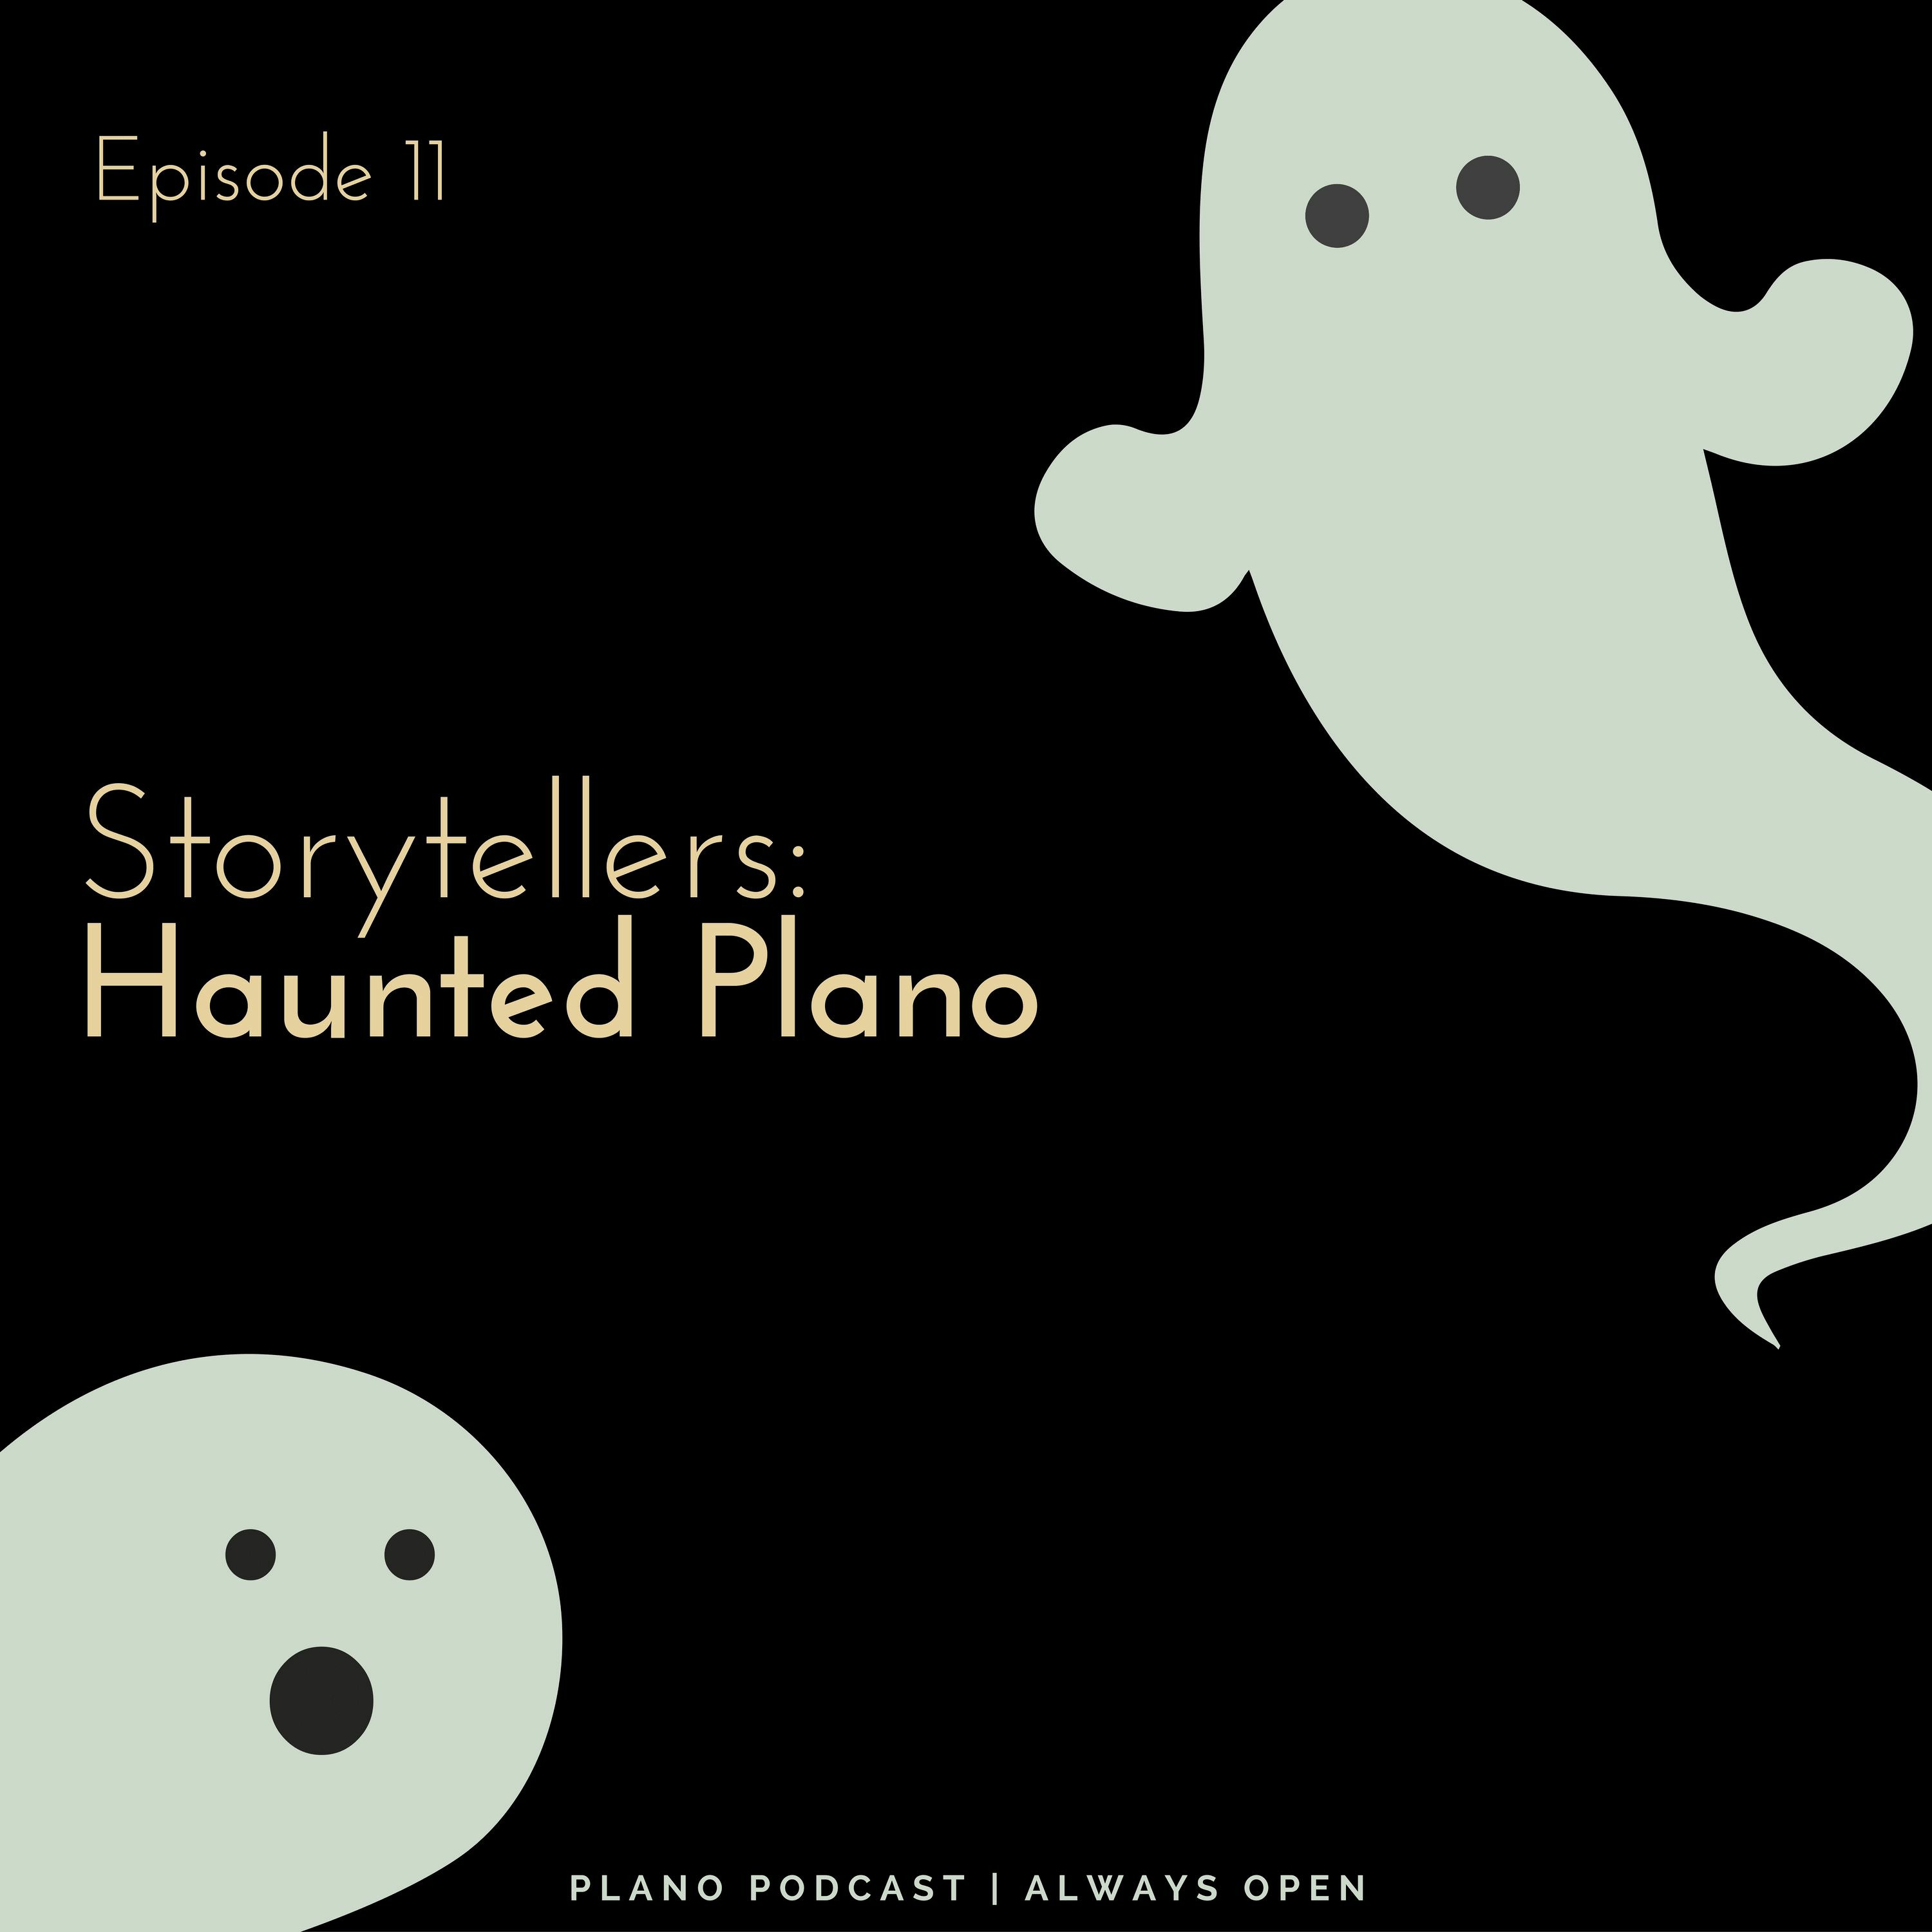 Episode 11 Storytellers | Haunted Plano